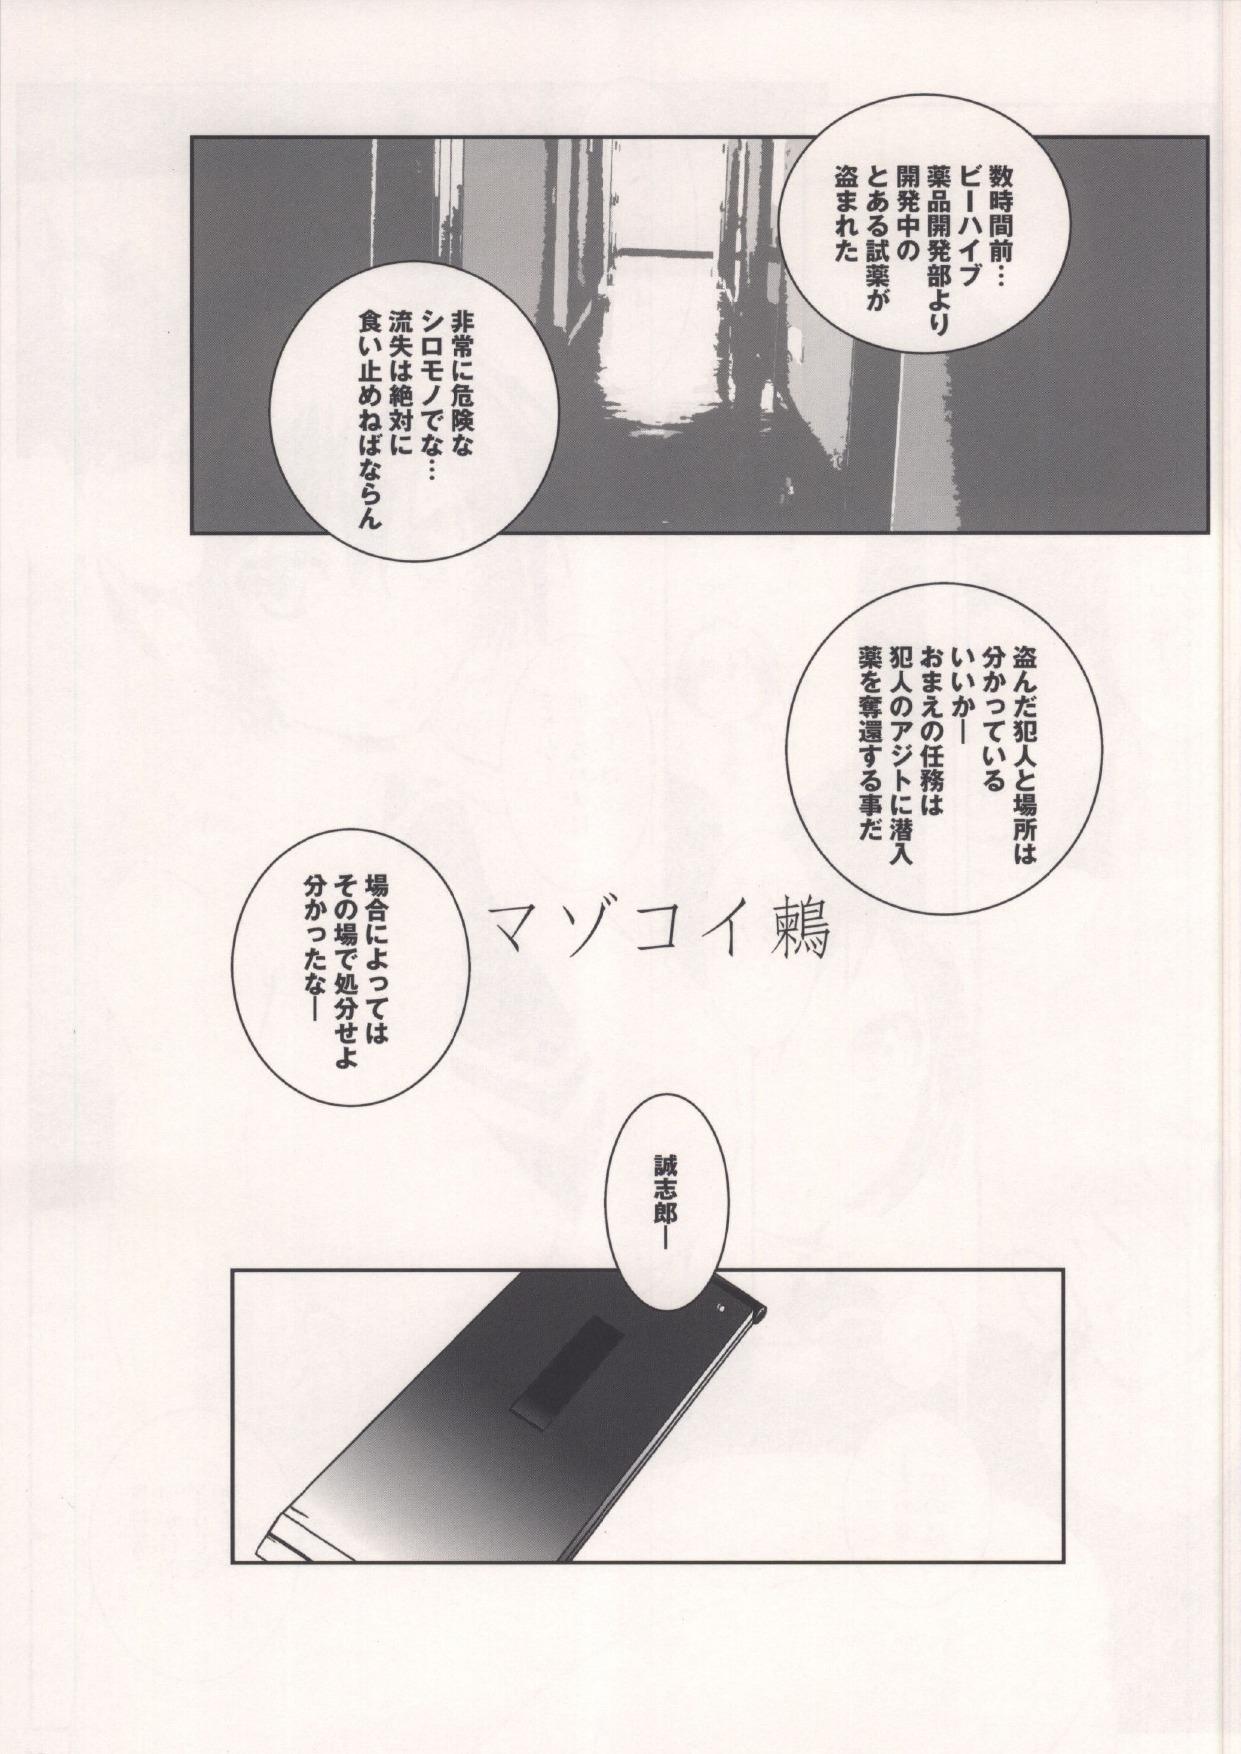 Daring MASO KOI TSUGUMI - Nisekoi Chunky - Page 2